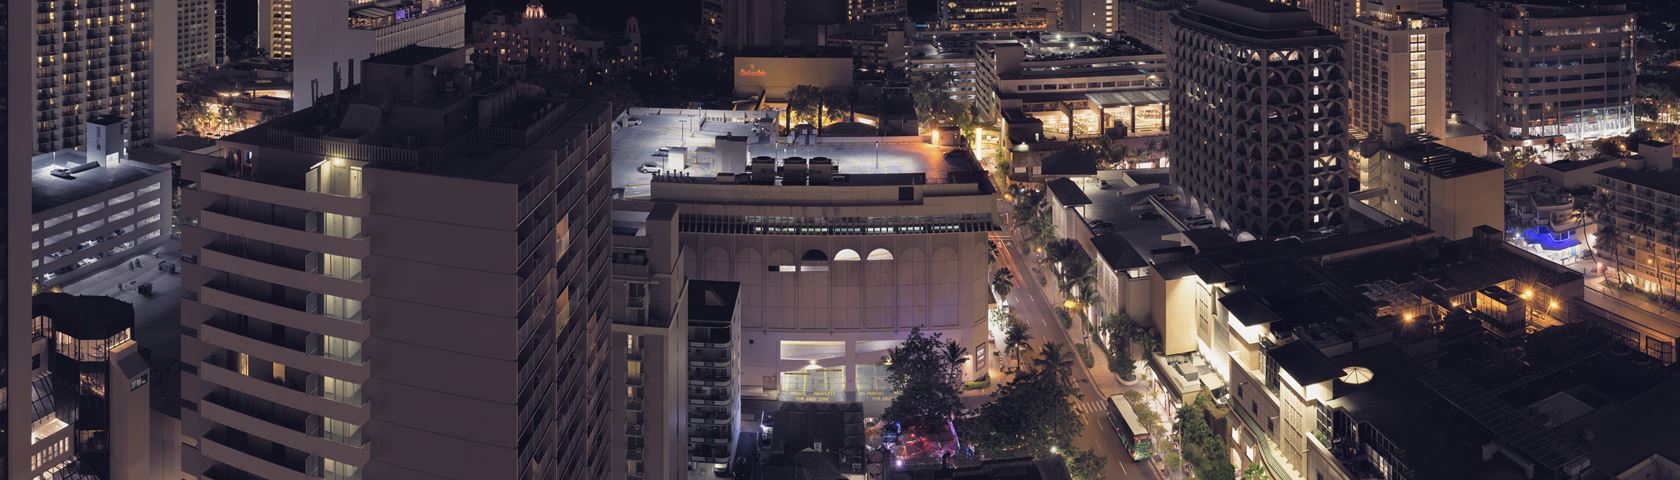 Honolulu Night City View